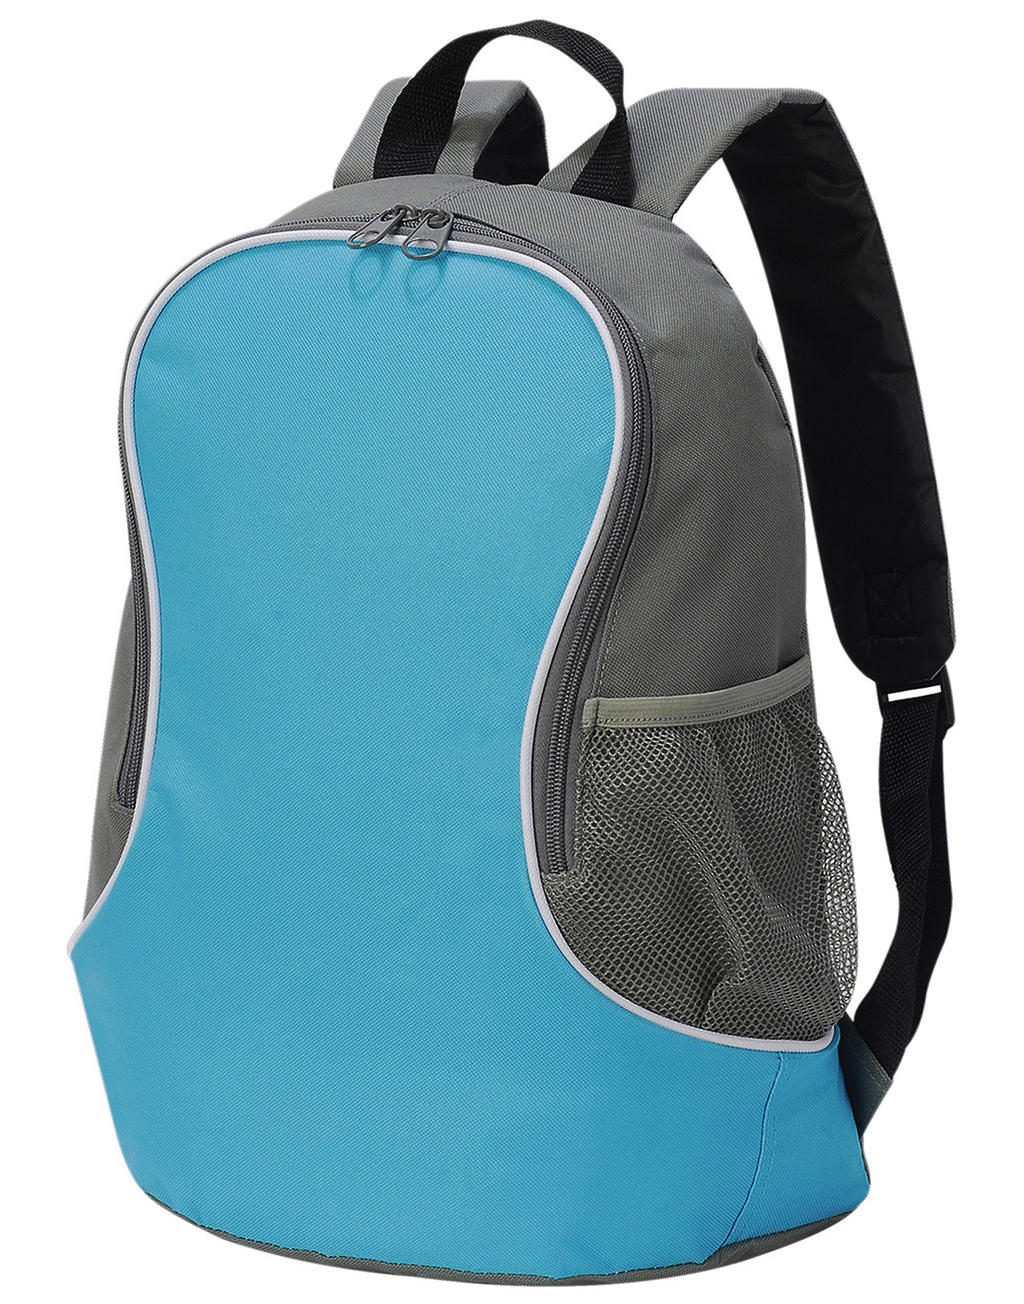  Fuji Basic Backpack in Farbe Black/White